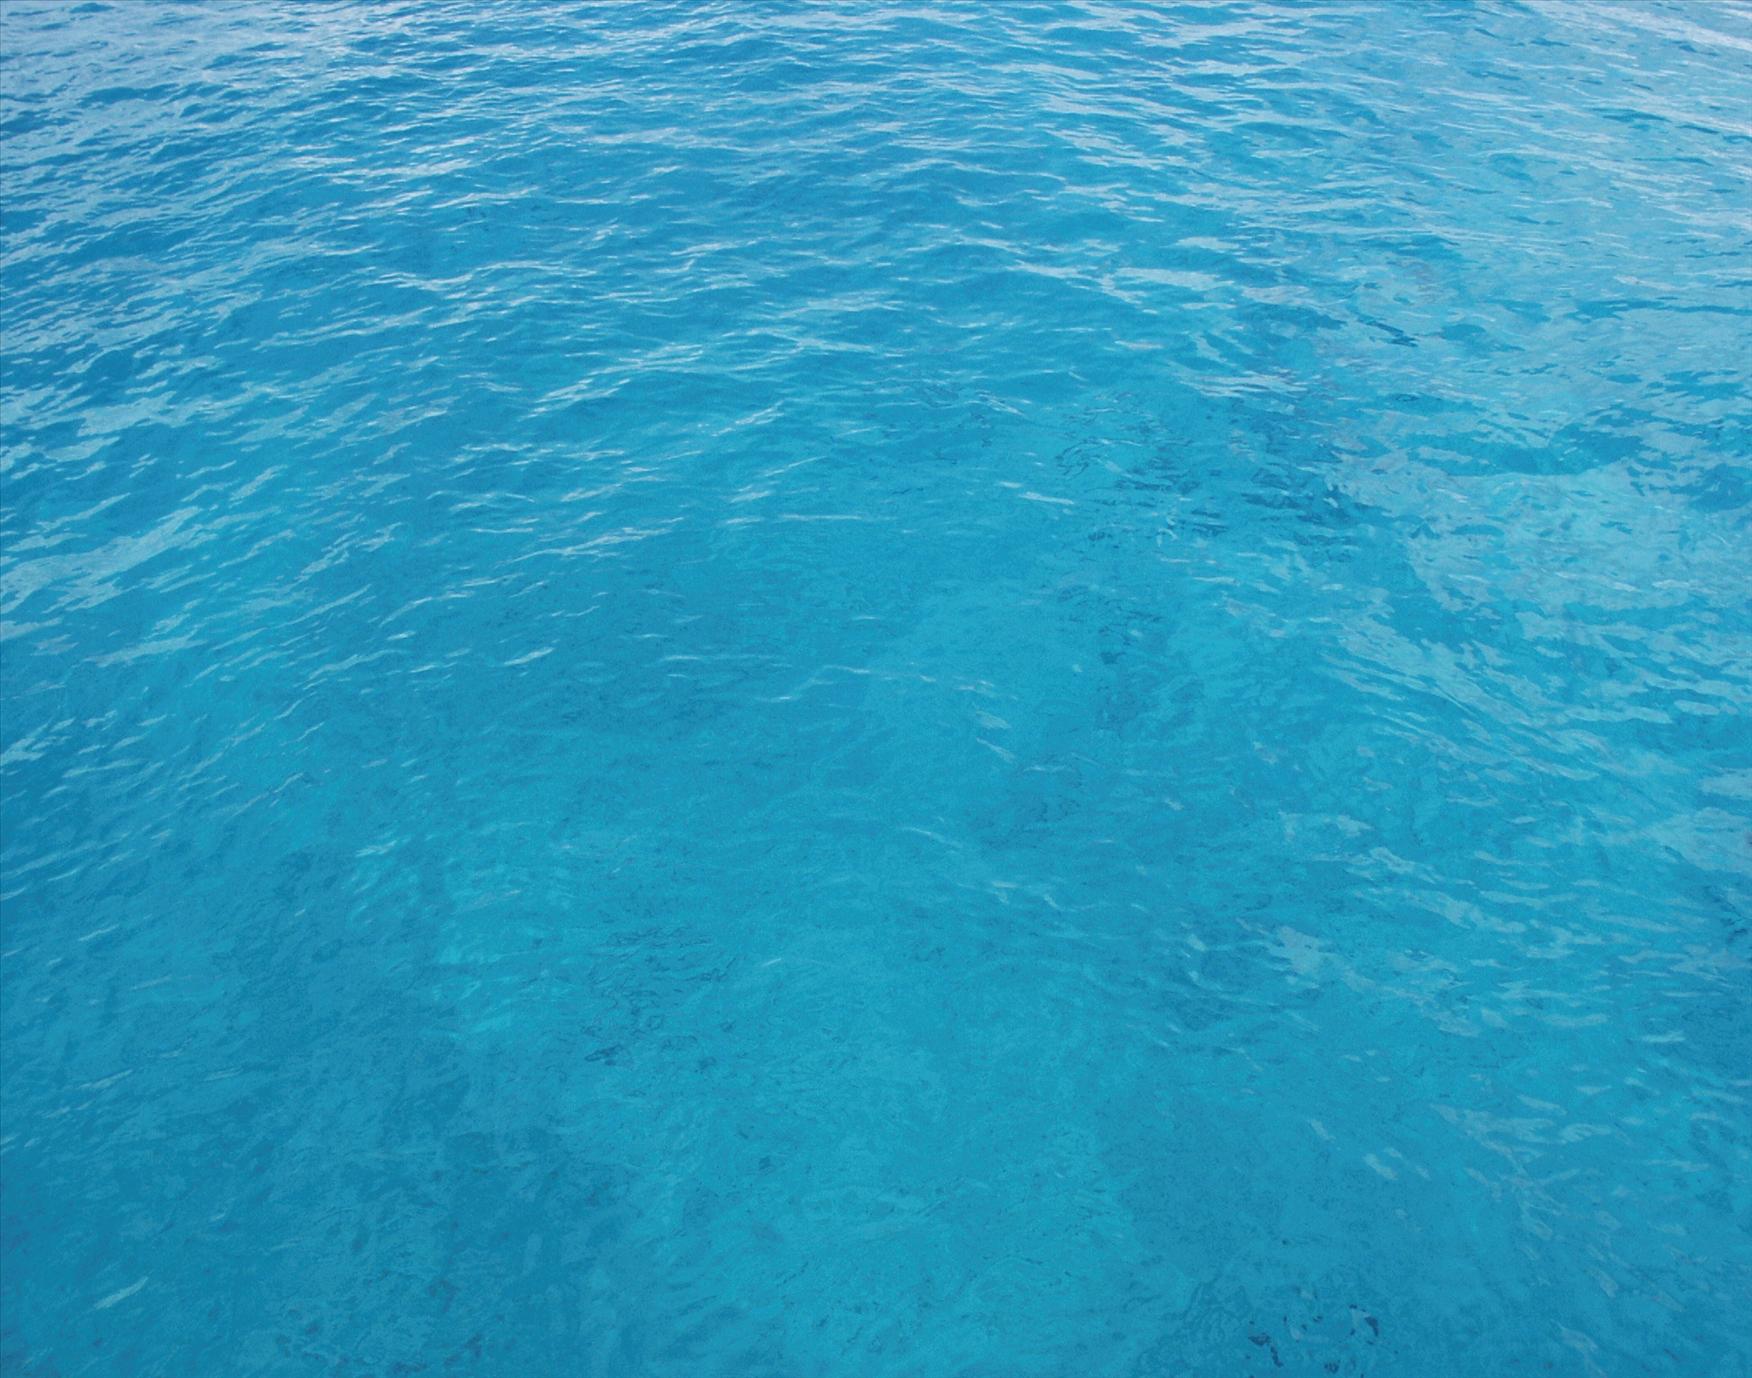 Ocean Water Background images